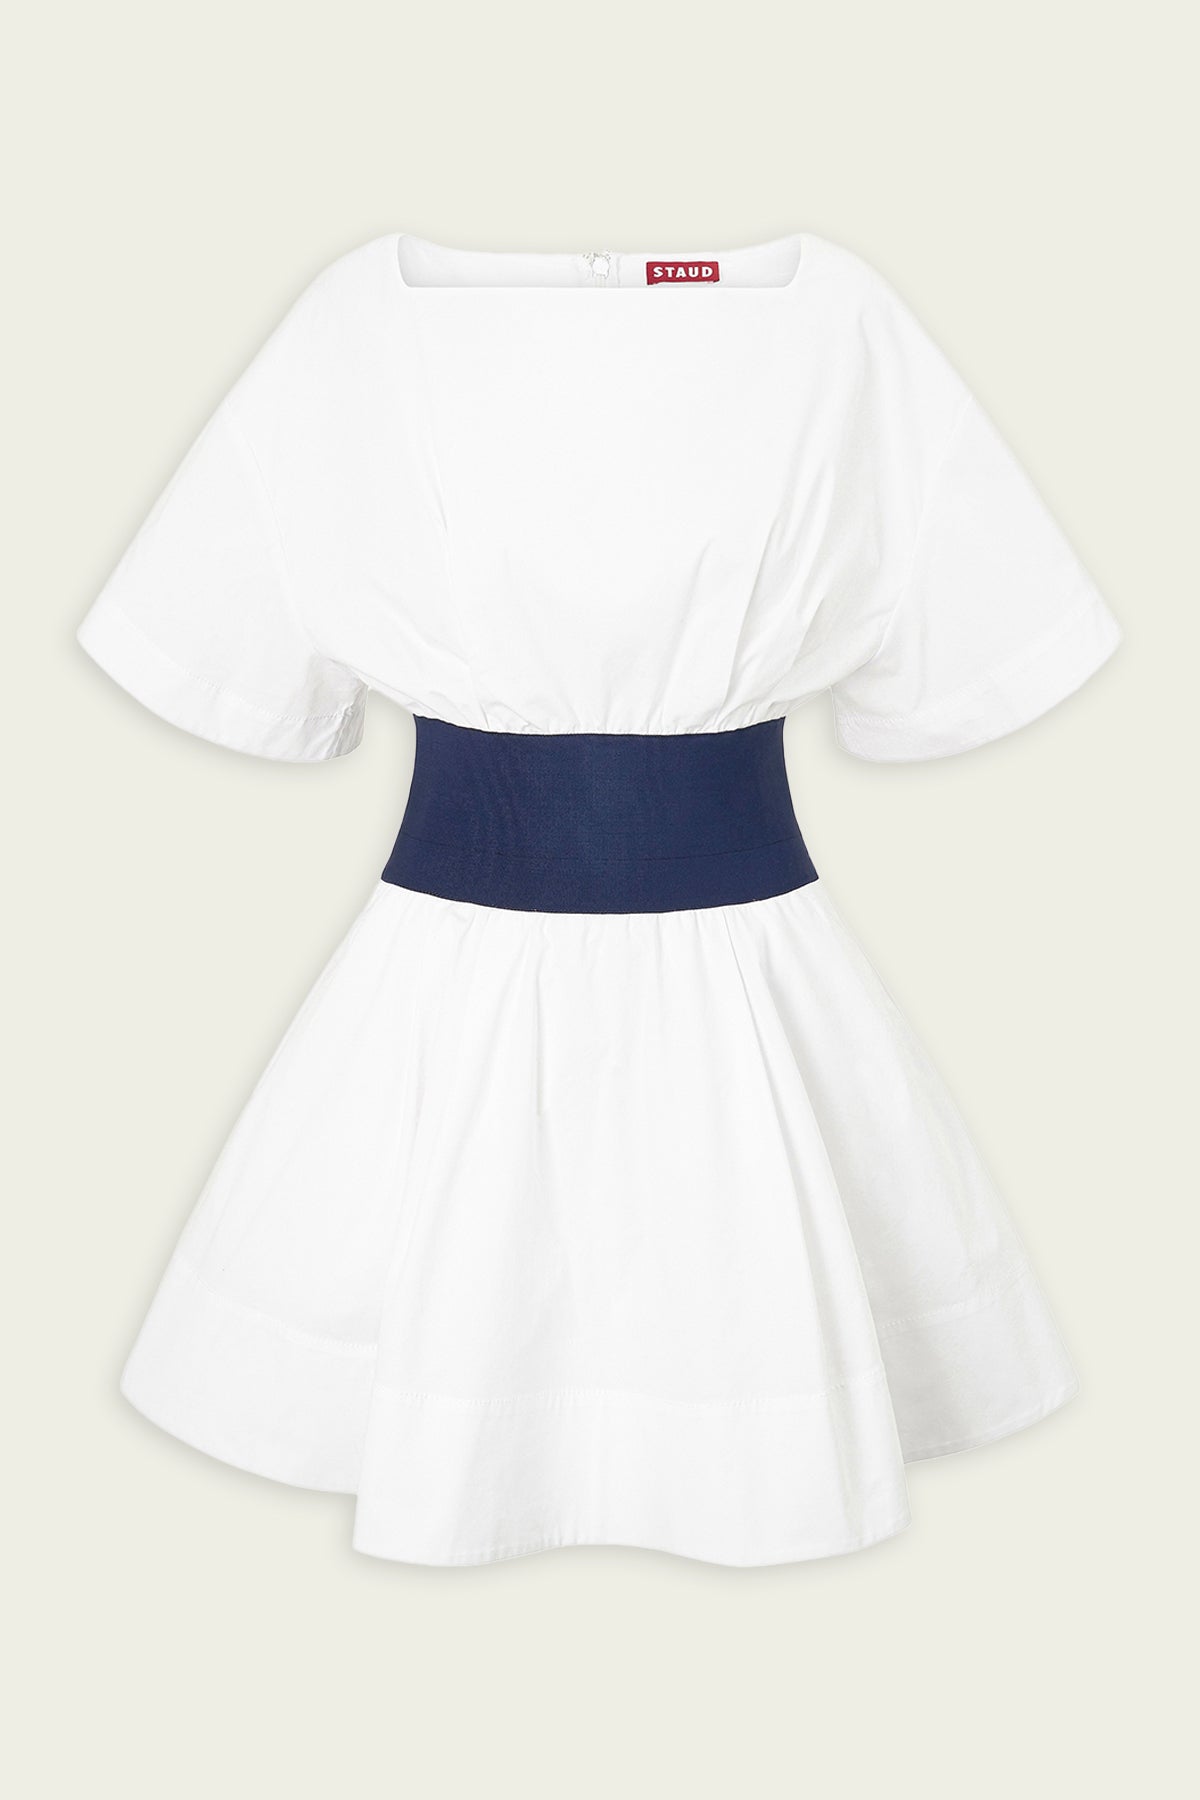 Amy Mini Dress in White Navy - shop-olivia.com